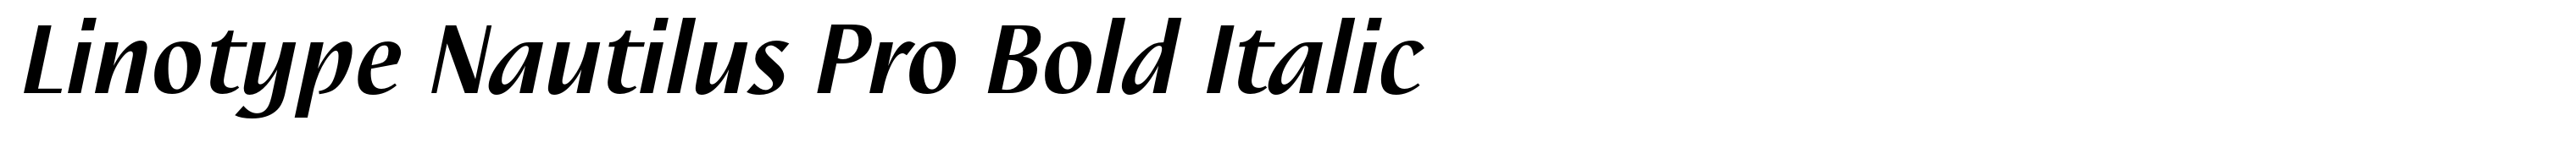 Linotype Nautilus Pro Bold Italic